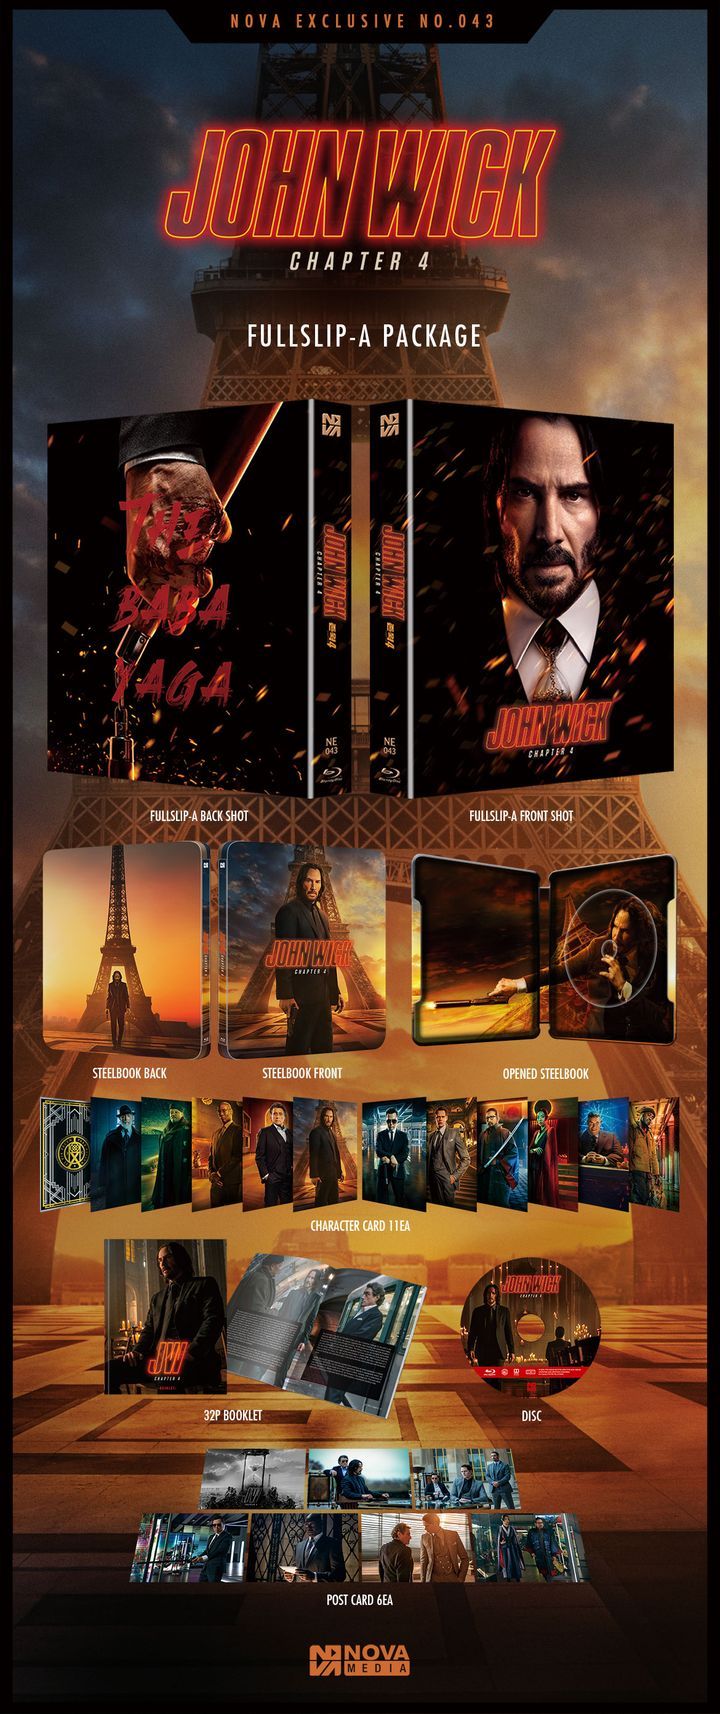 YESASIA: John Wick: Chapter 2 (4K Ultra HD + Blu-ray) (Full Slip Normal  Edition) (Korea Version) Blu-ray - Keanu Reeves, Common, Nova Media -  Western / World Movies & Videos - Free